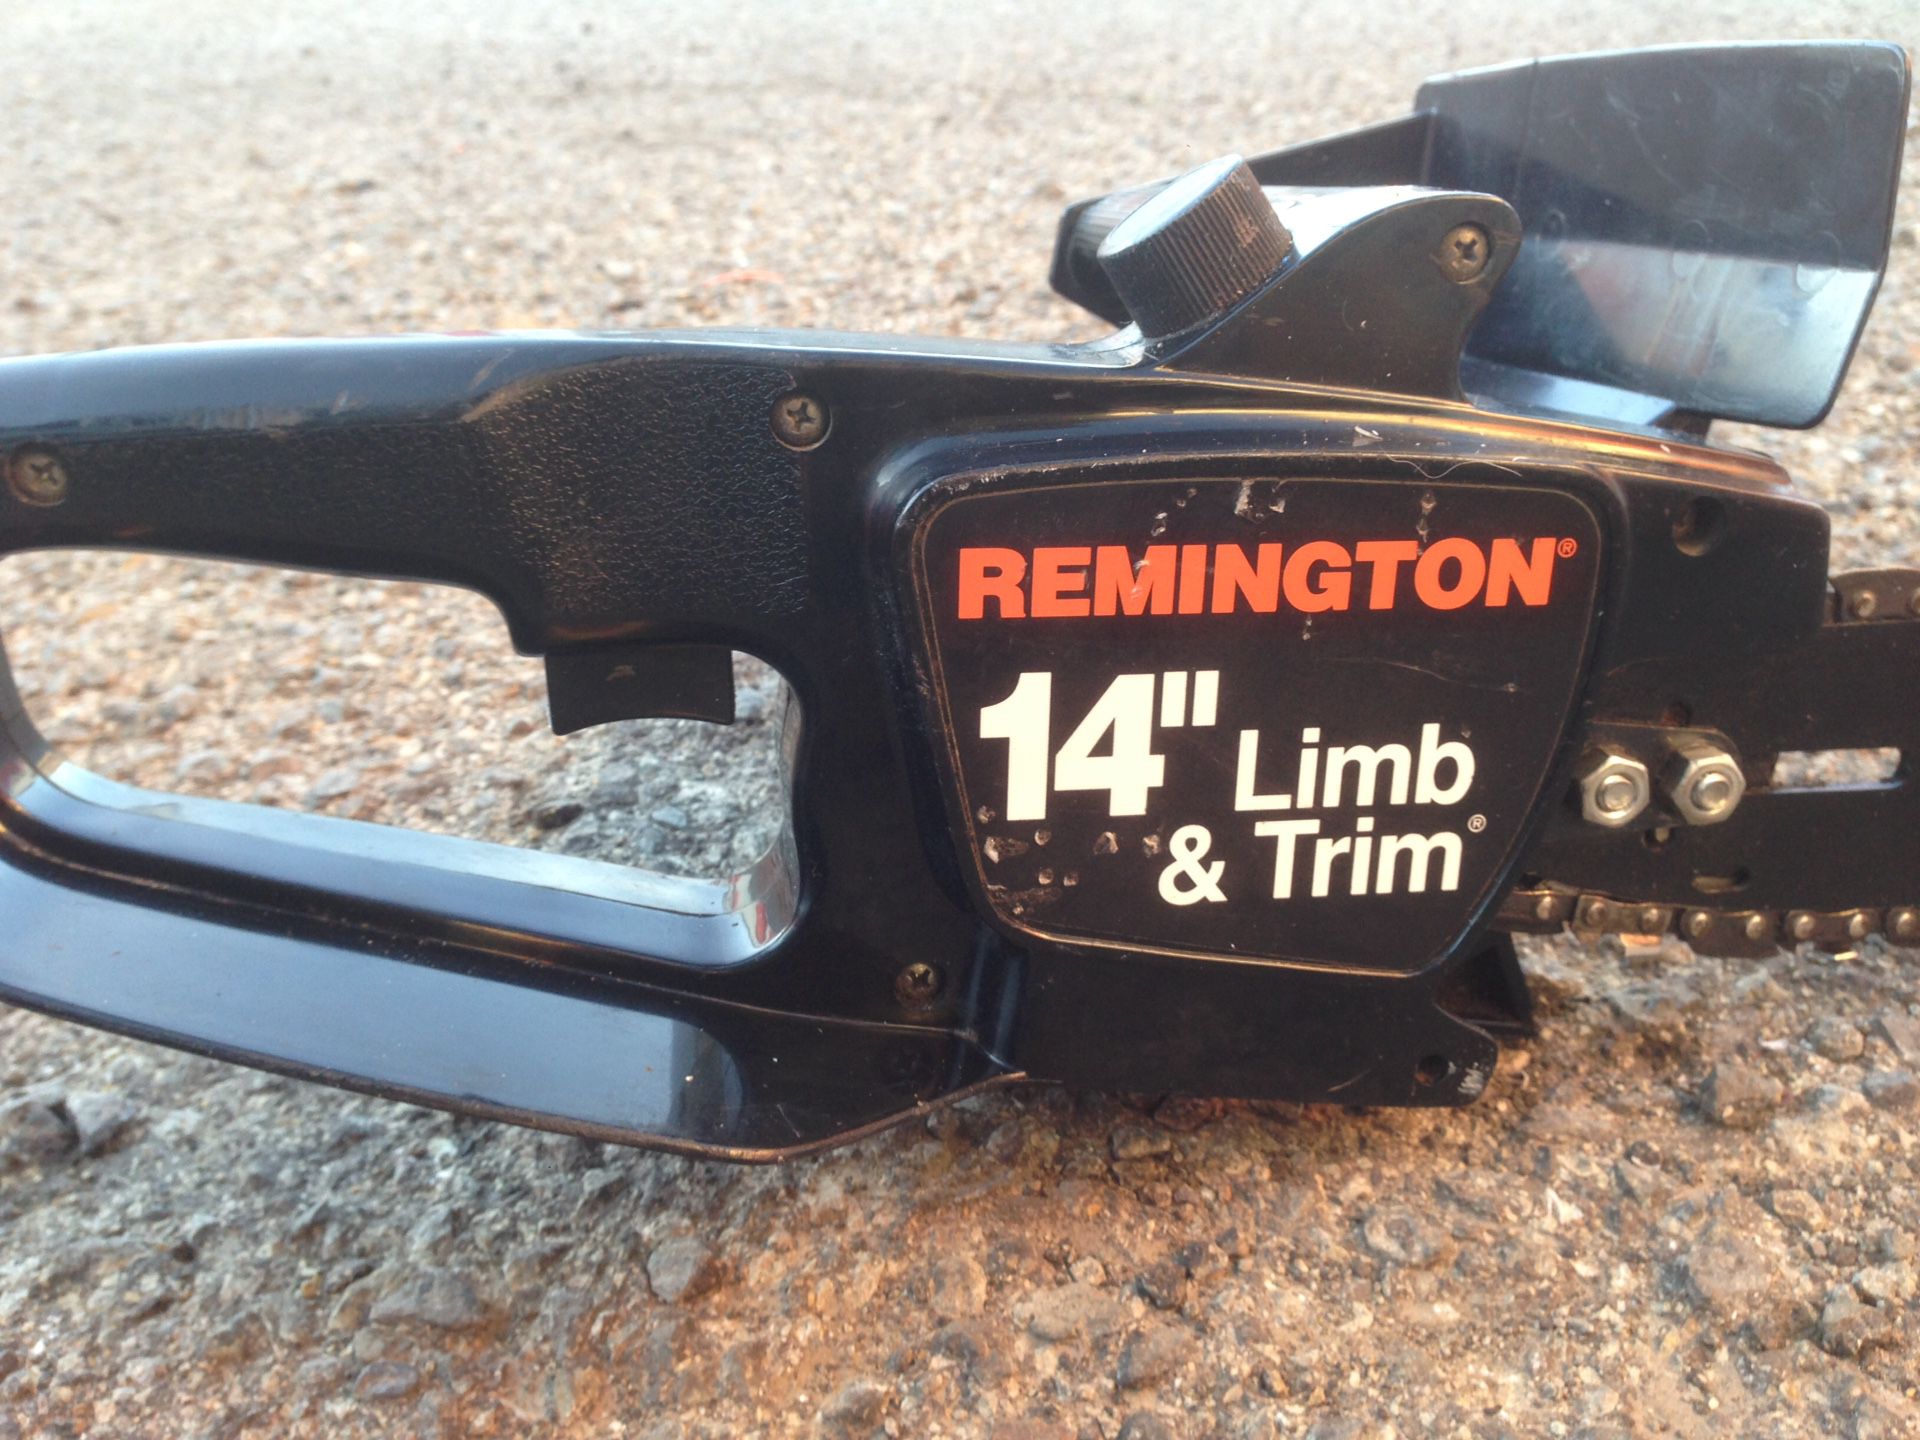 Remington 14" chainsaw